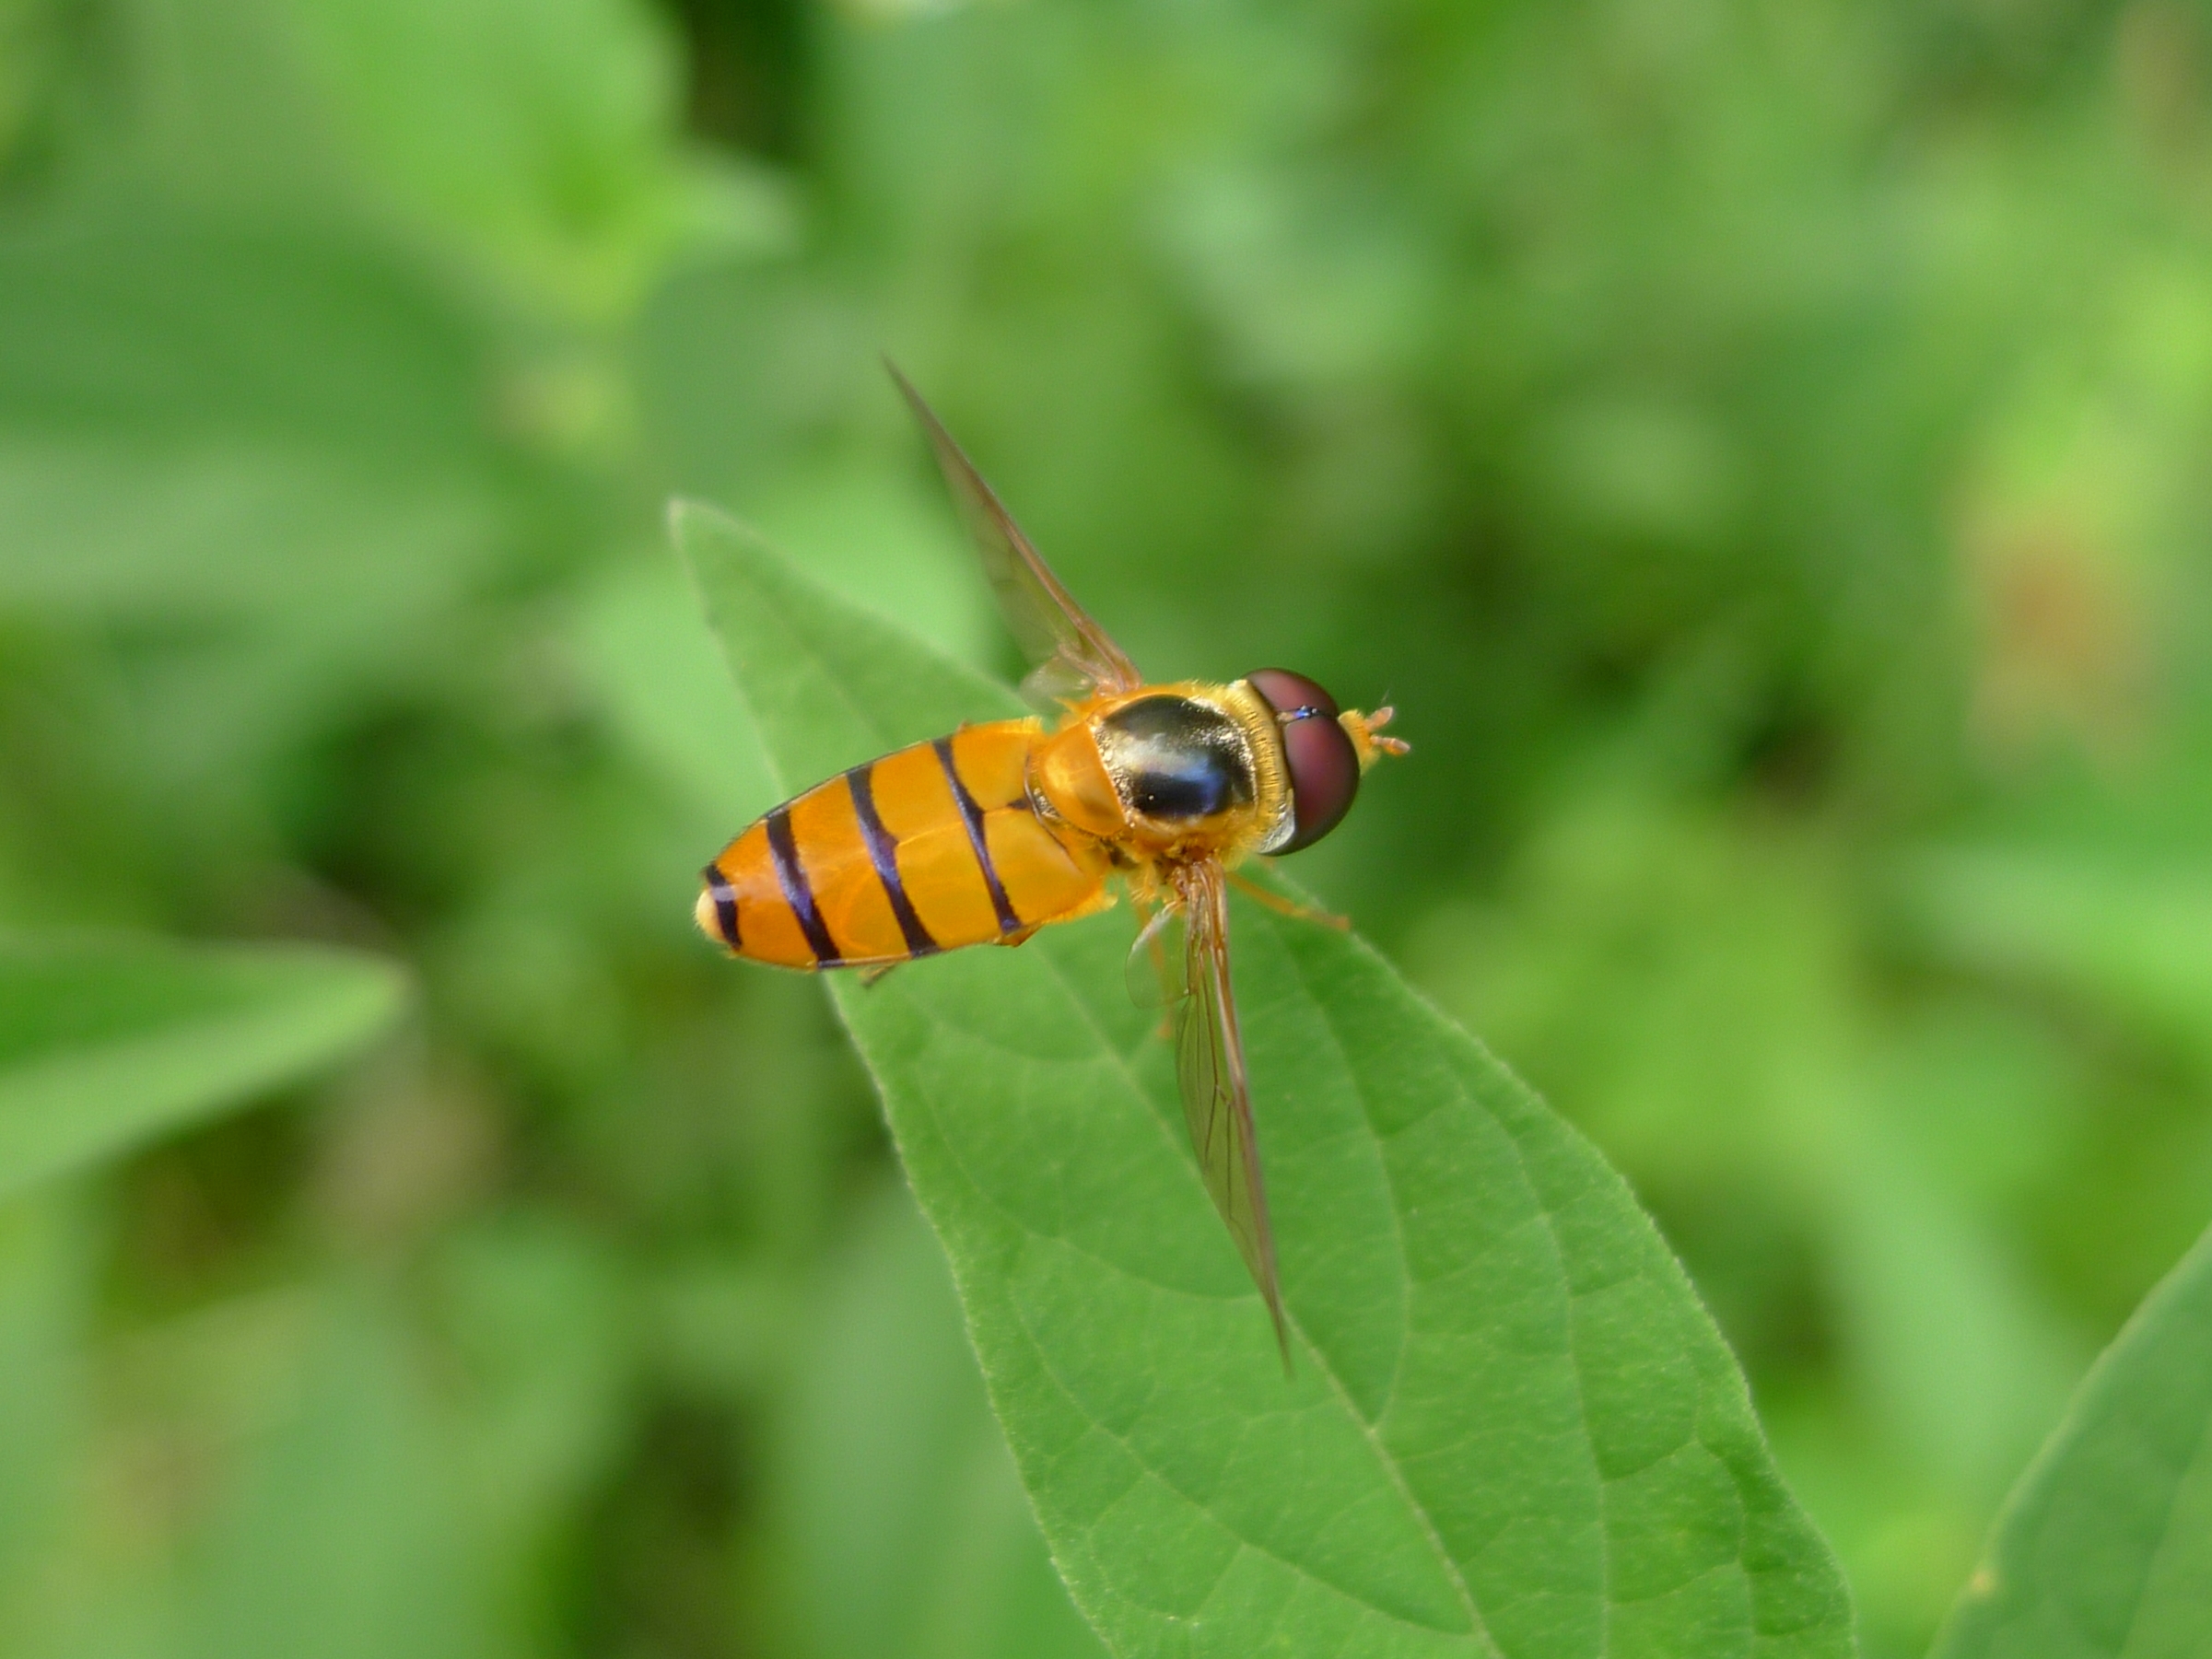 File:Orange striped hover fly (5693863789).jpg - Wikimedia Commons